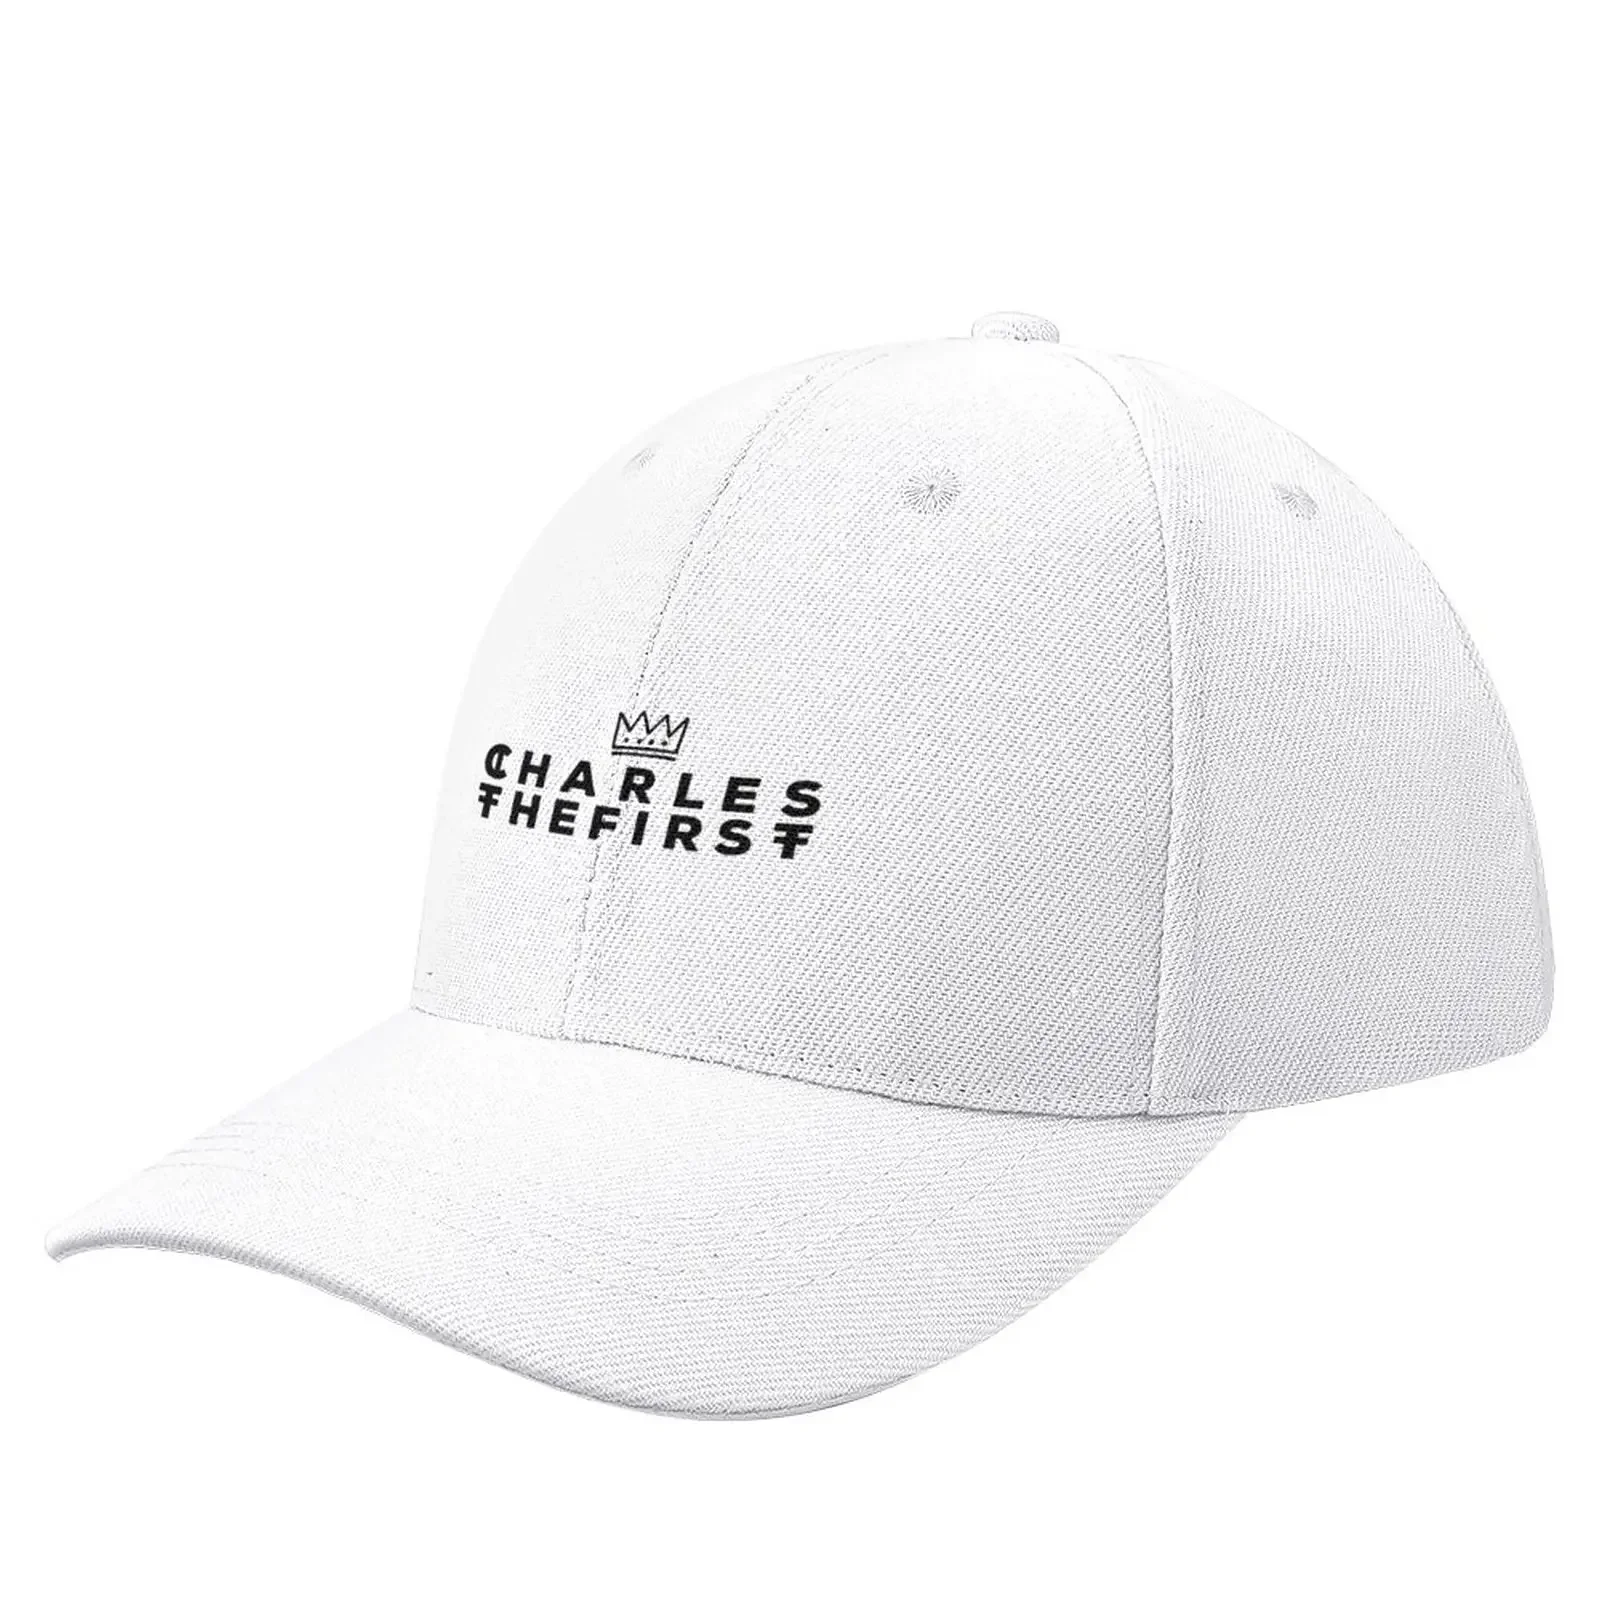 

charles the first Baseball Cap Beach Bag Gentleman Hat Bobble Hat Icon Hats For Women Men'S